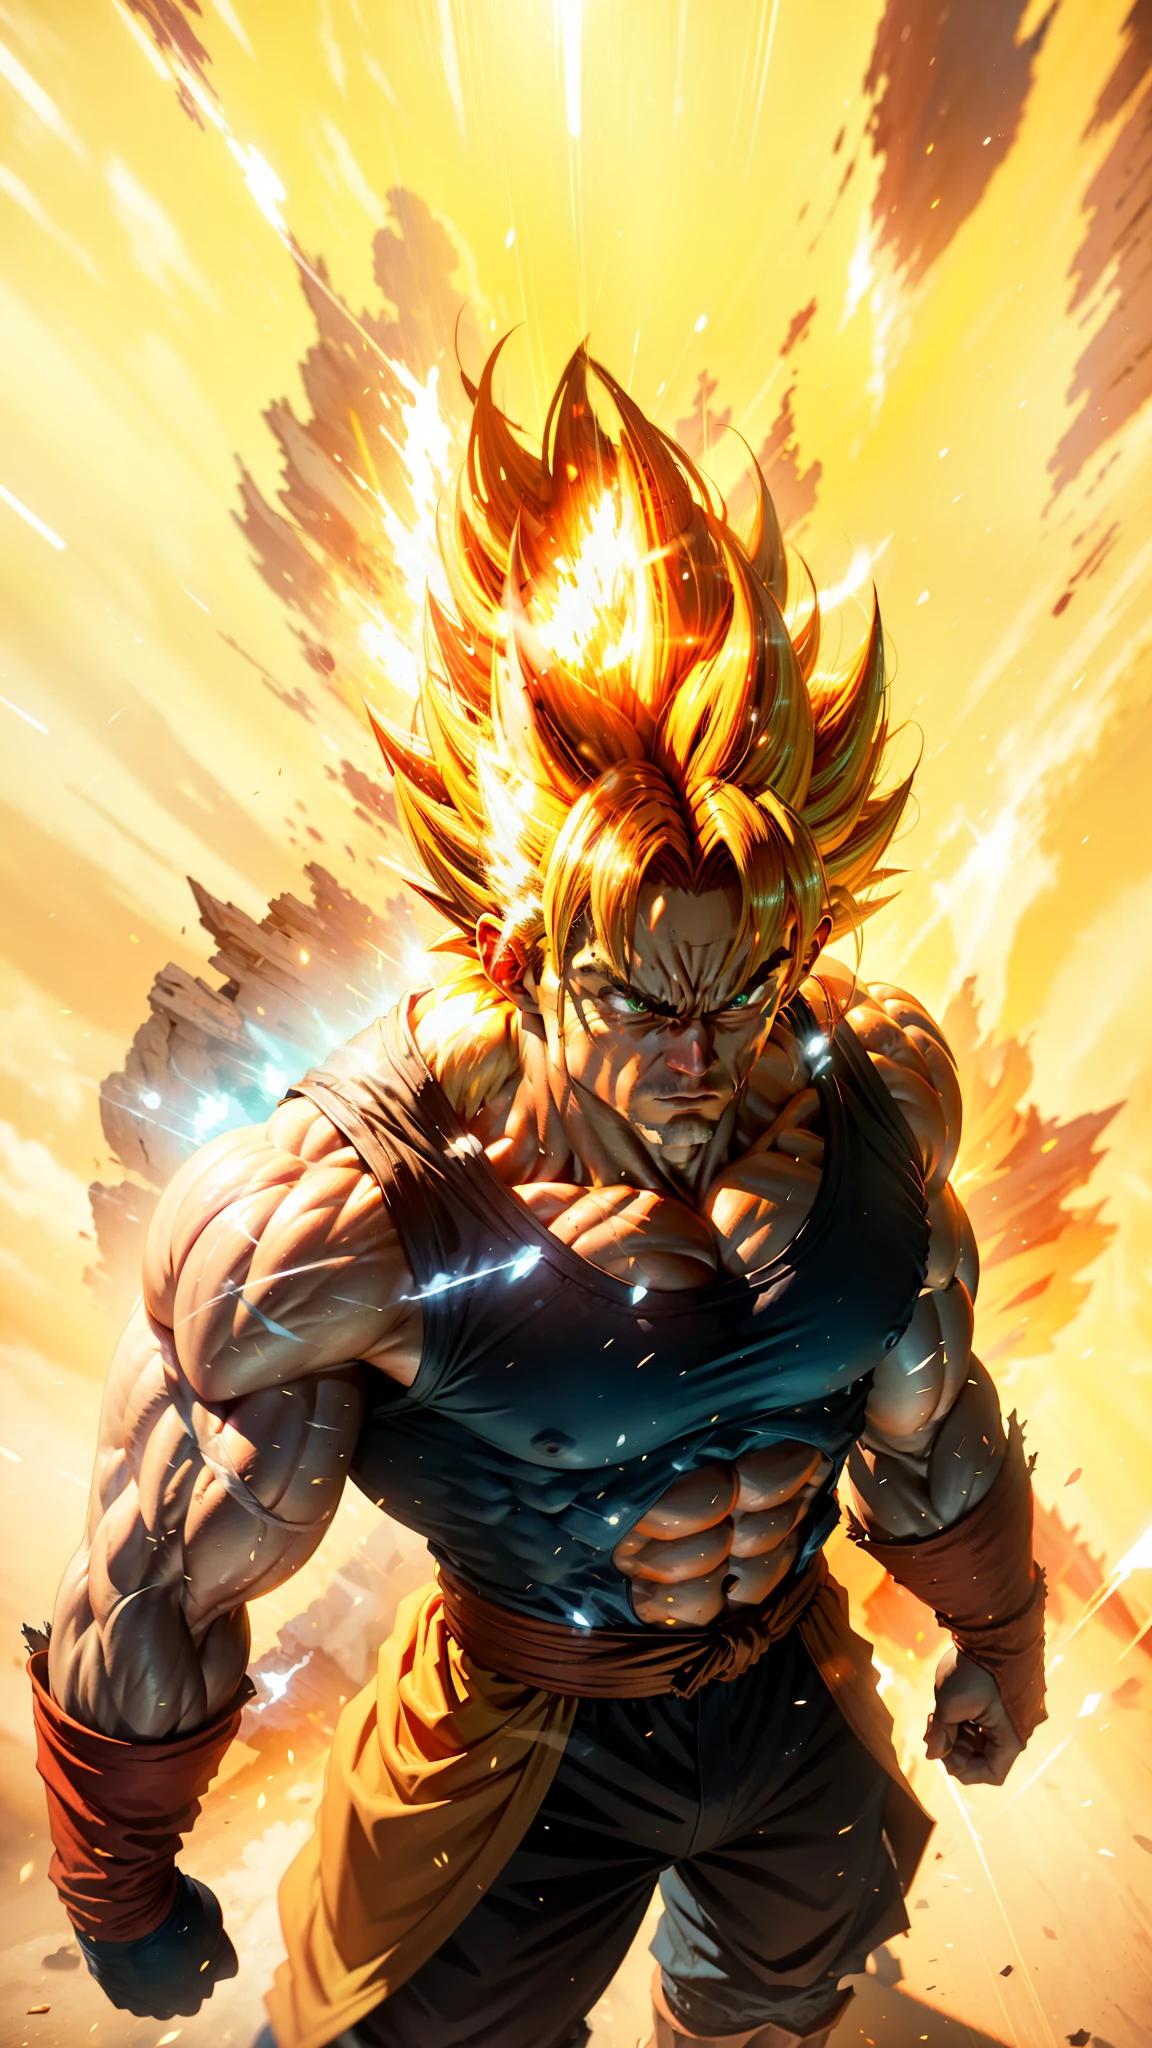 Goku super saiyan, Hombre adulto con cabello dorado neón extremadamente musculoso, músculos definidos llenos de venas, chaleco de color azul oscuro, guantes rojos, cara seria, definición muscular, hombros grandes, bíceps redondeados, Motor irreal 5.8k.